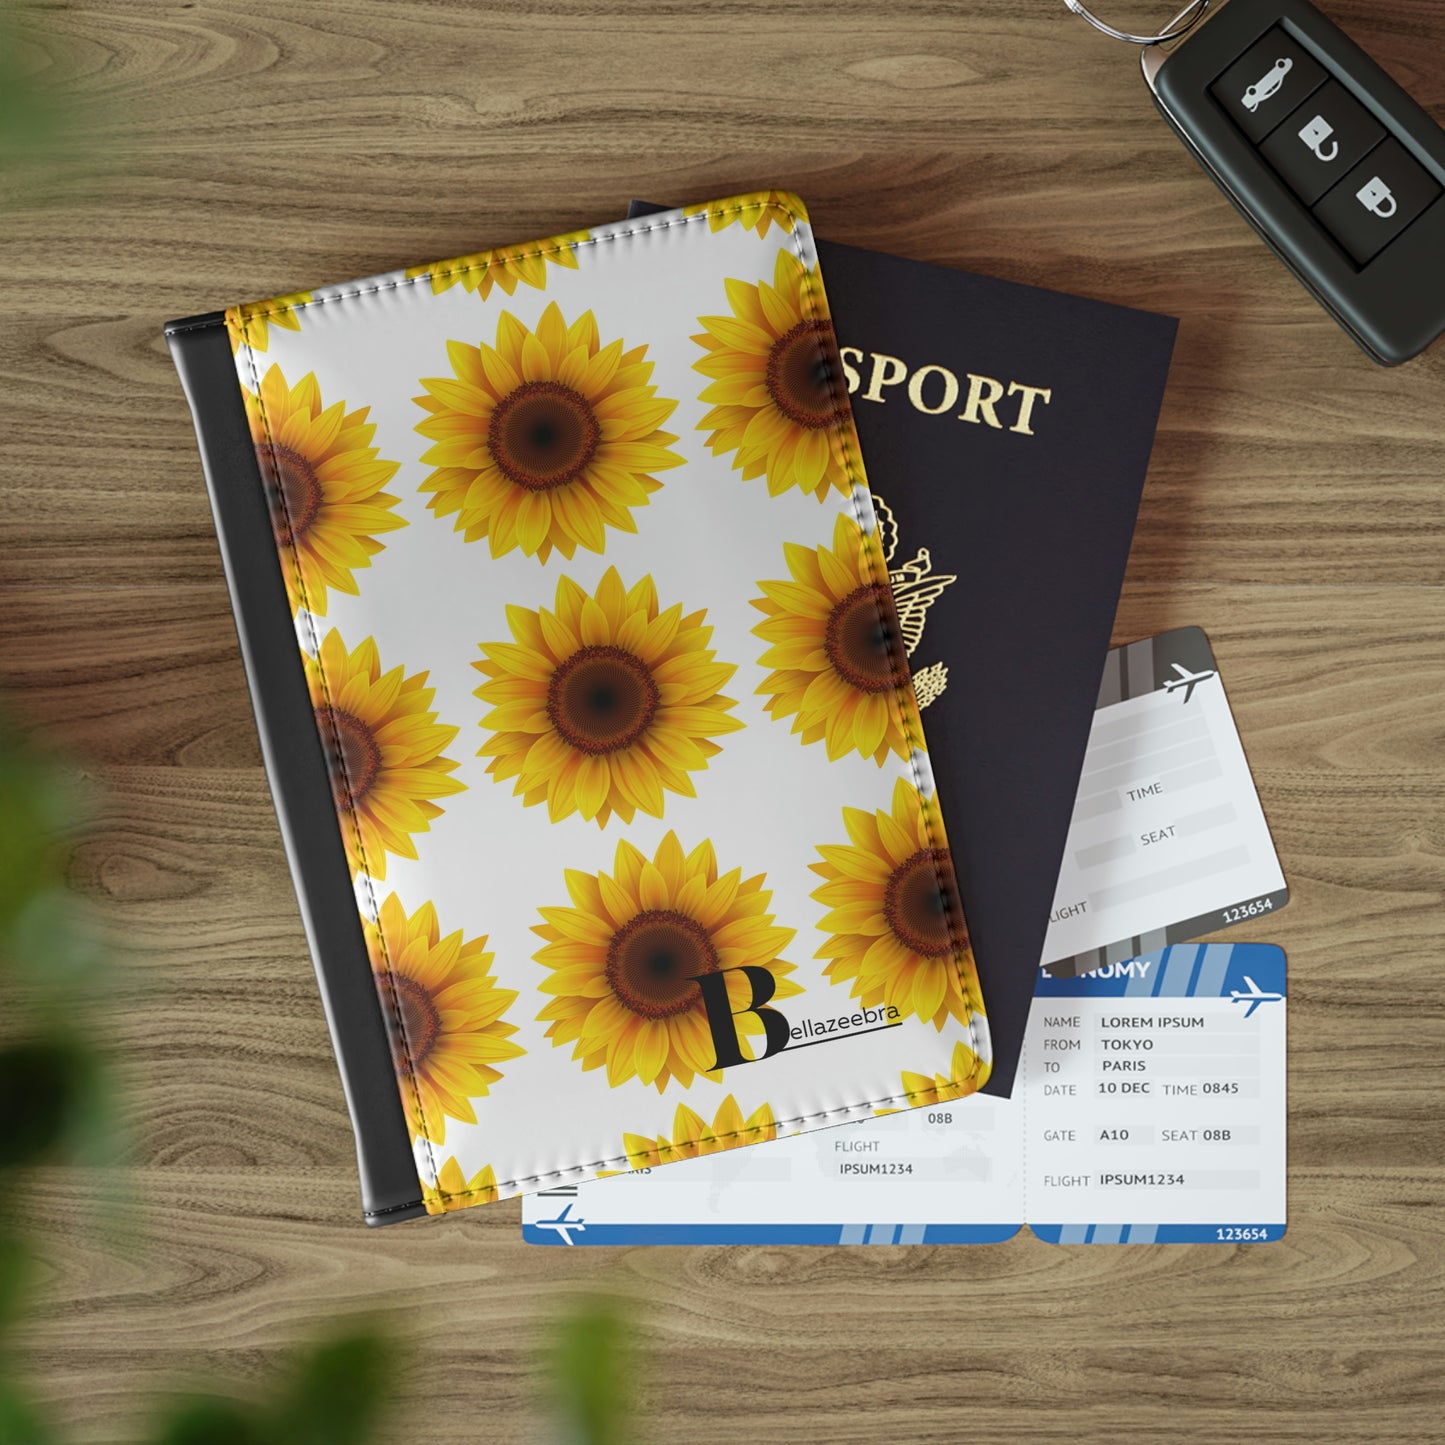 BELLAZEEBRA Passport Cover with repeating sunflowers design